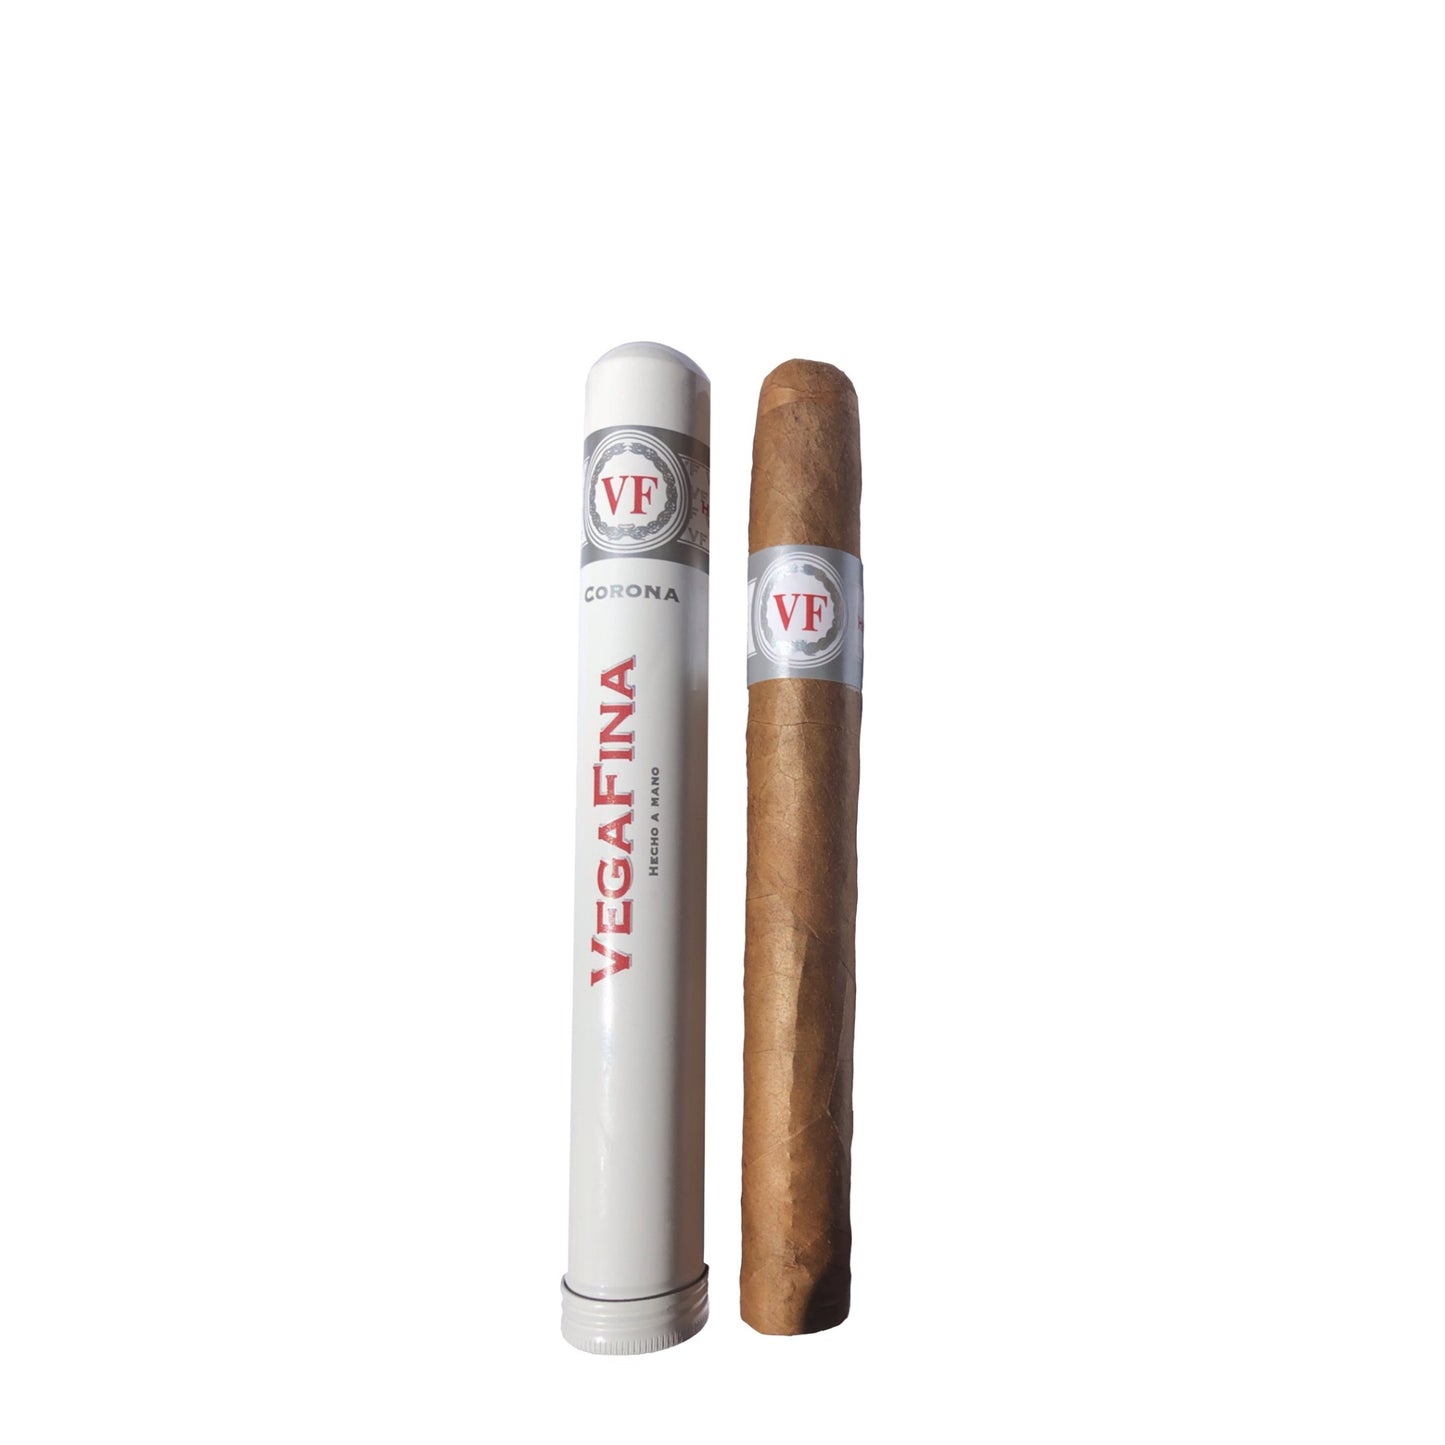 VegaFina Corona Tubed Cigar